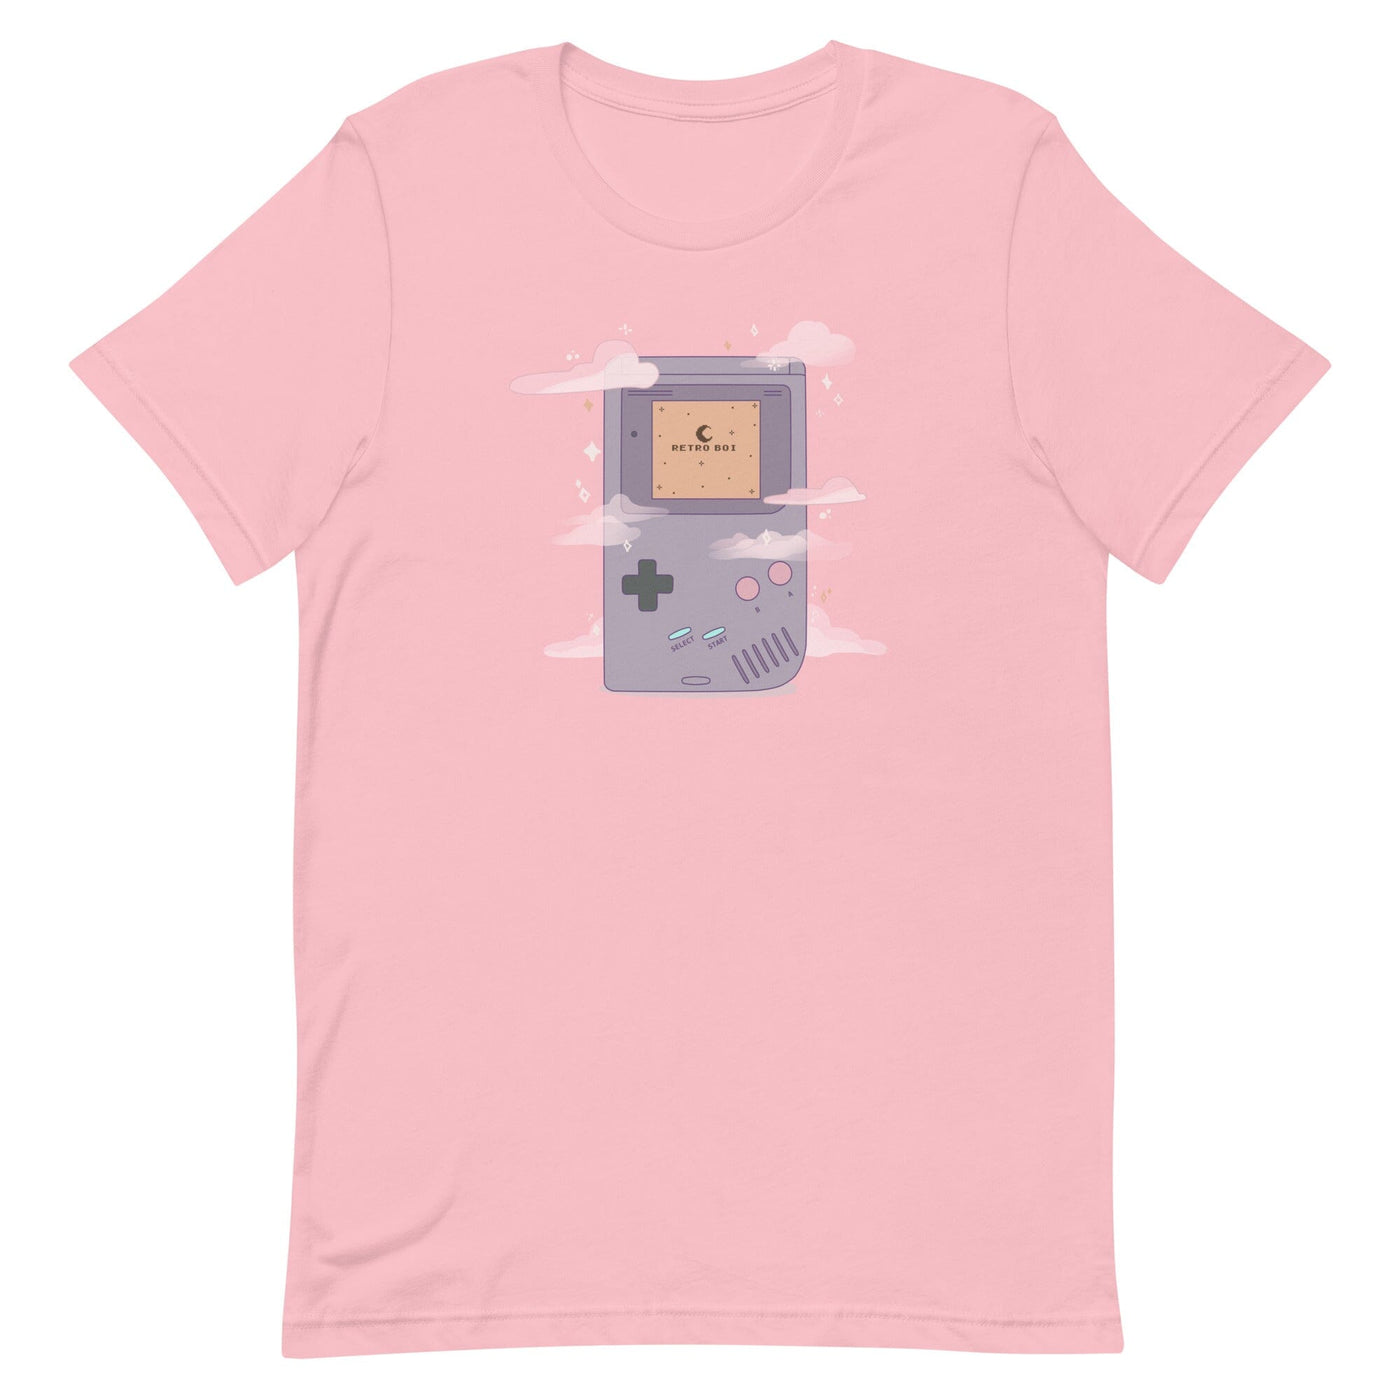 Retro Boi | Unisex t-shirt | Retro Gaming Threads & Thistles Inventory Pink S 